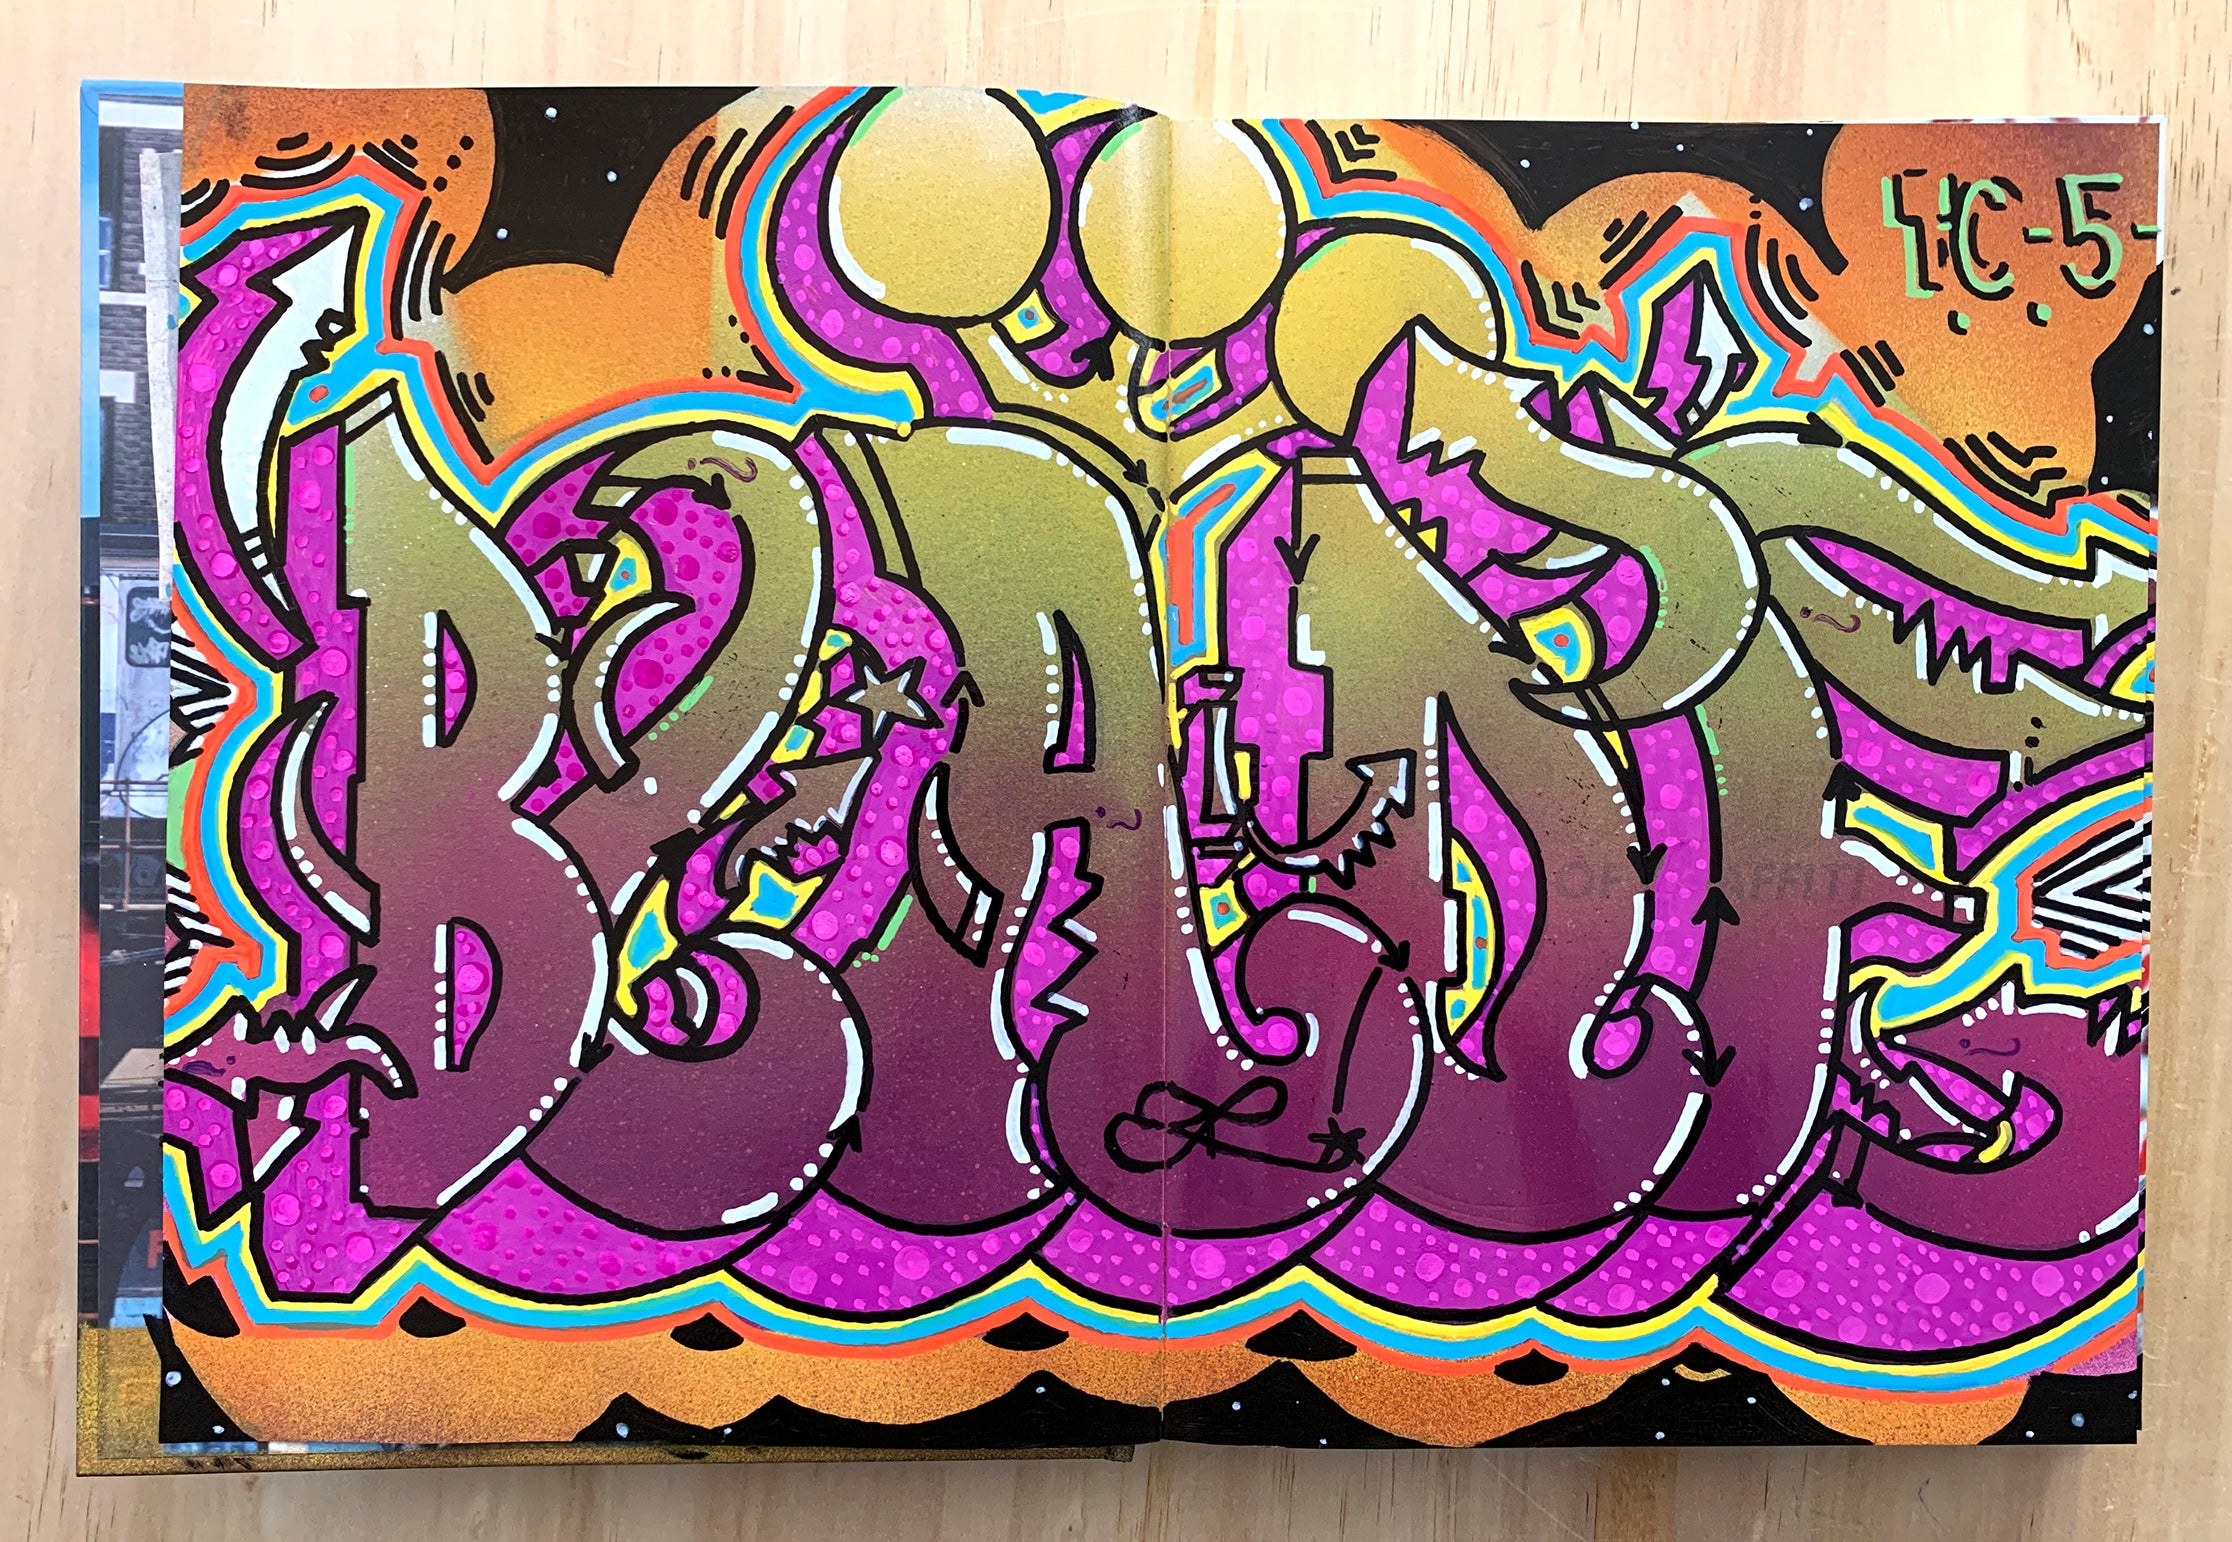 BLADE - "King of graffiti" Custom Book Drawing 16